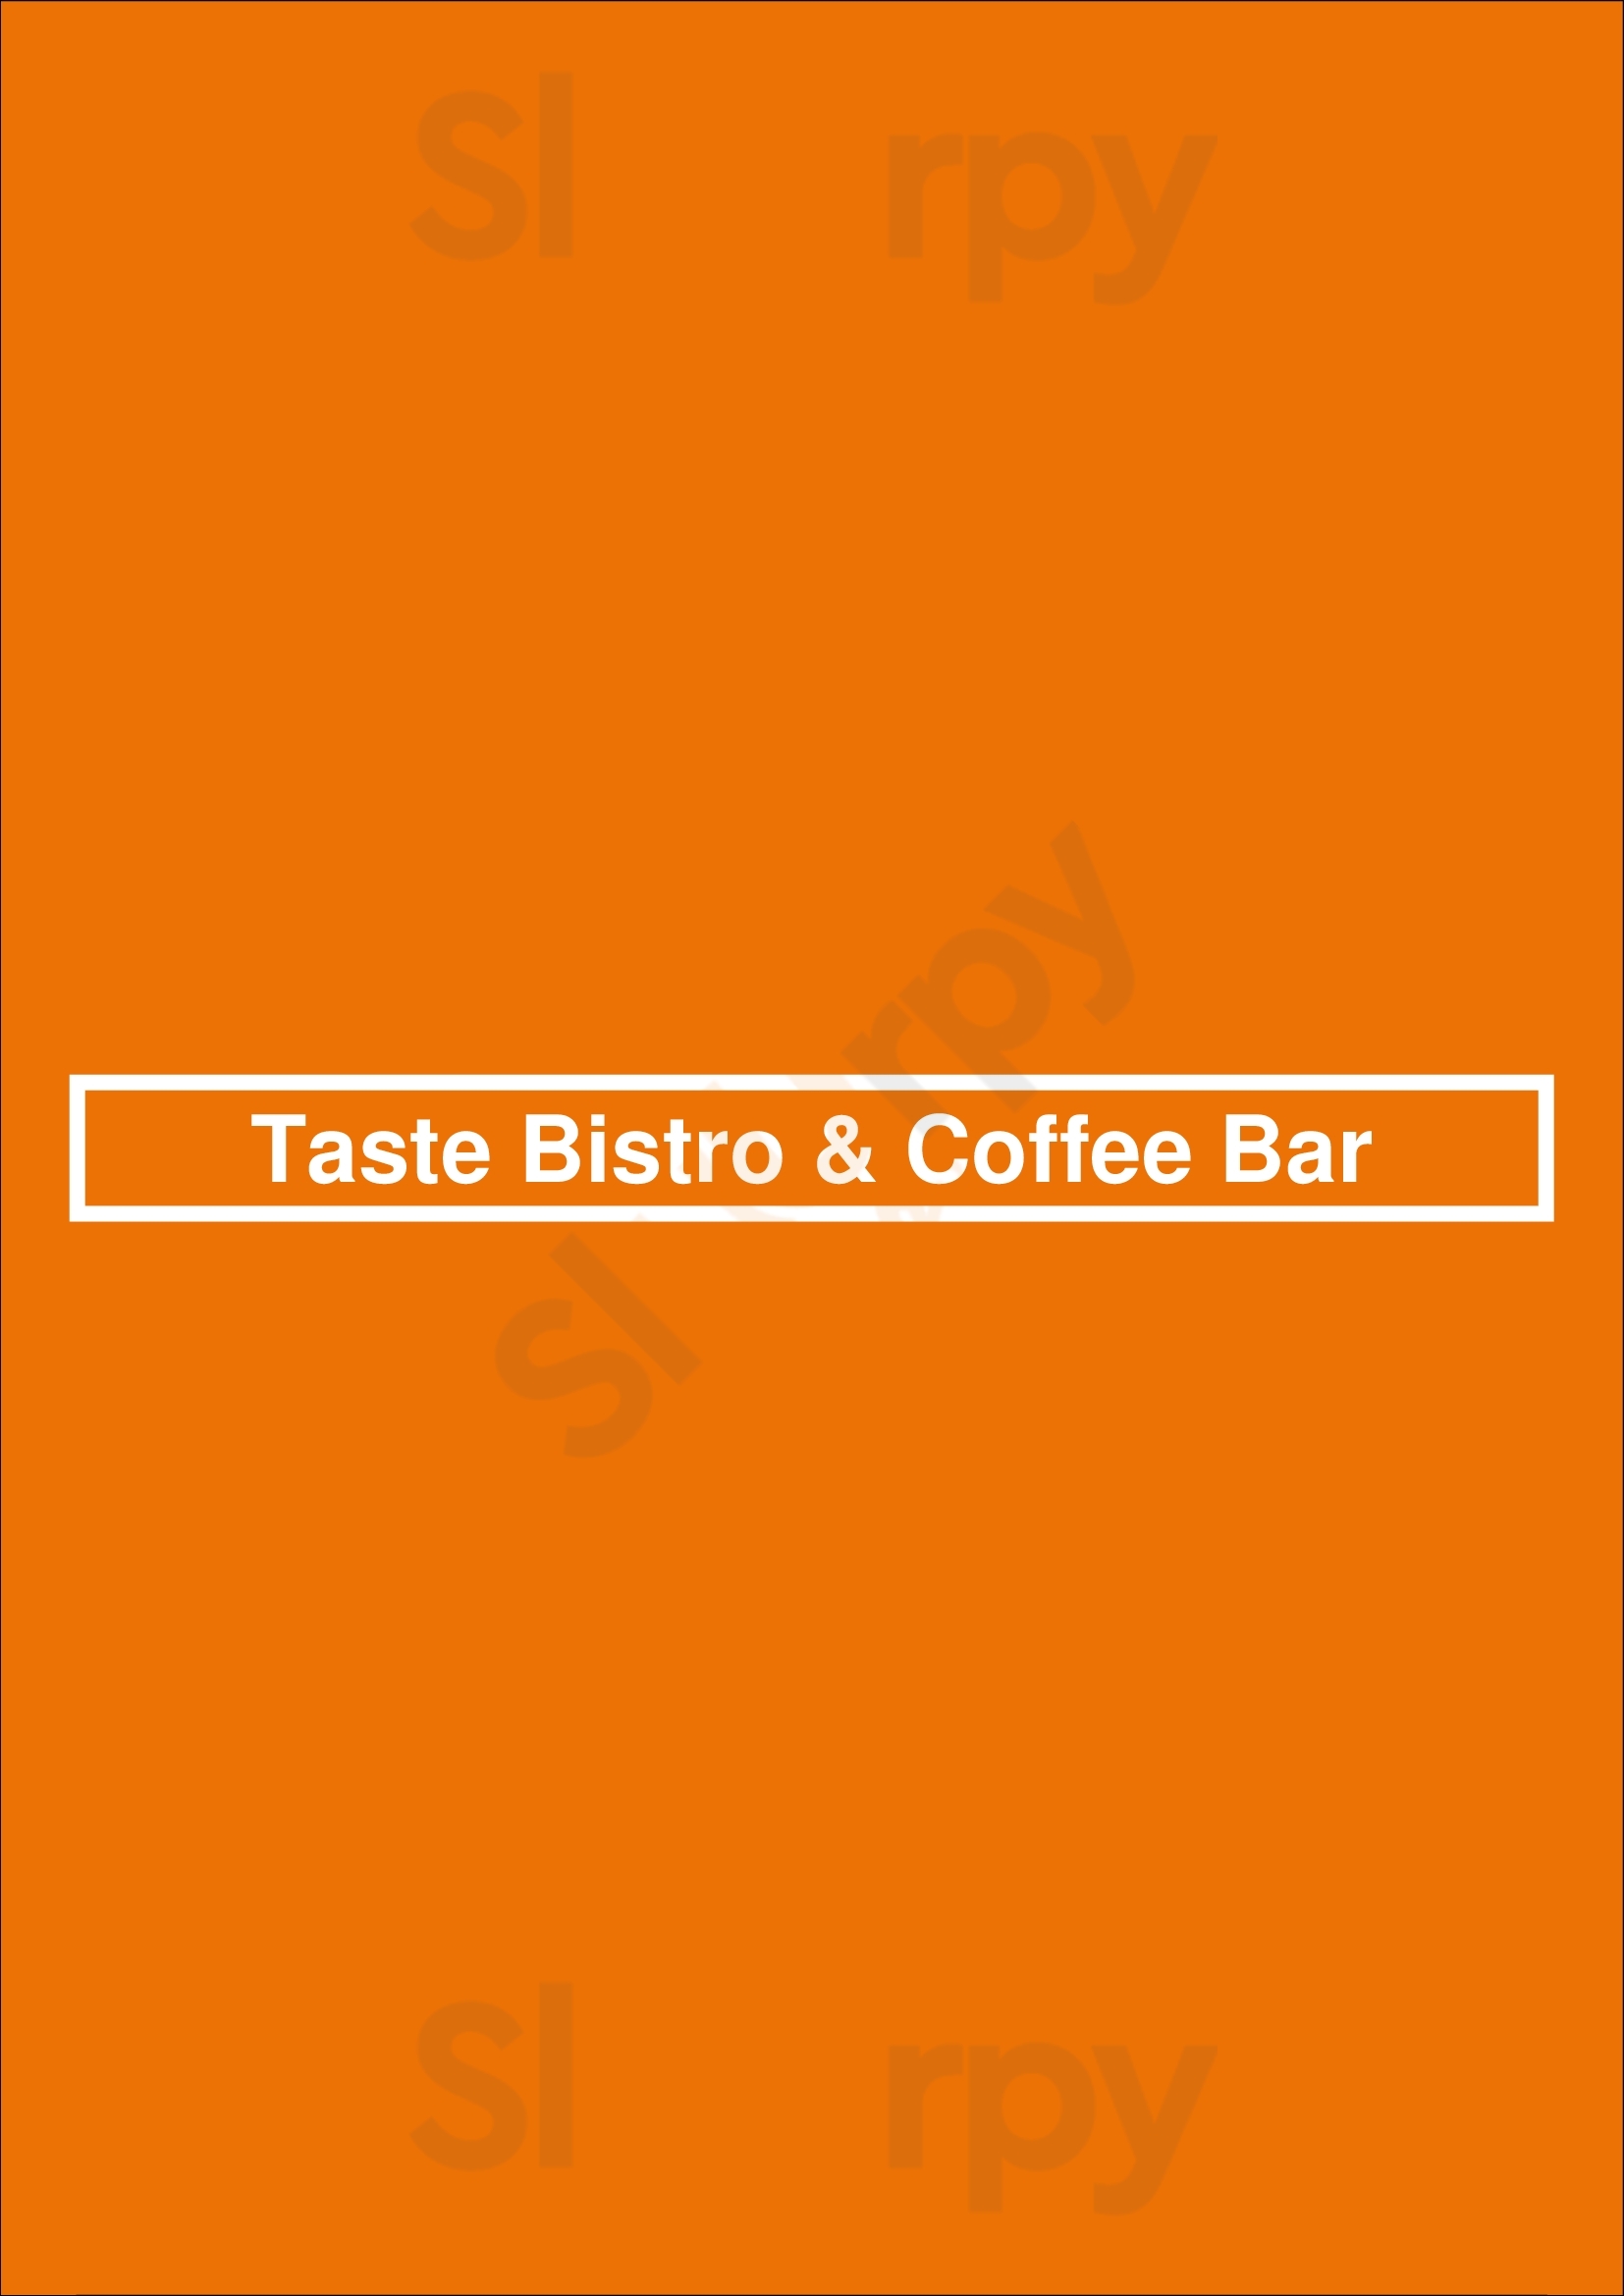 Taste Bistro & Coffee Bar East Aurora Menu - 1